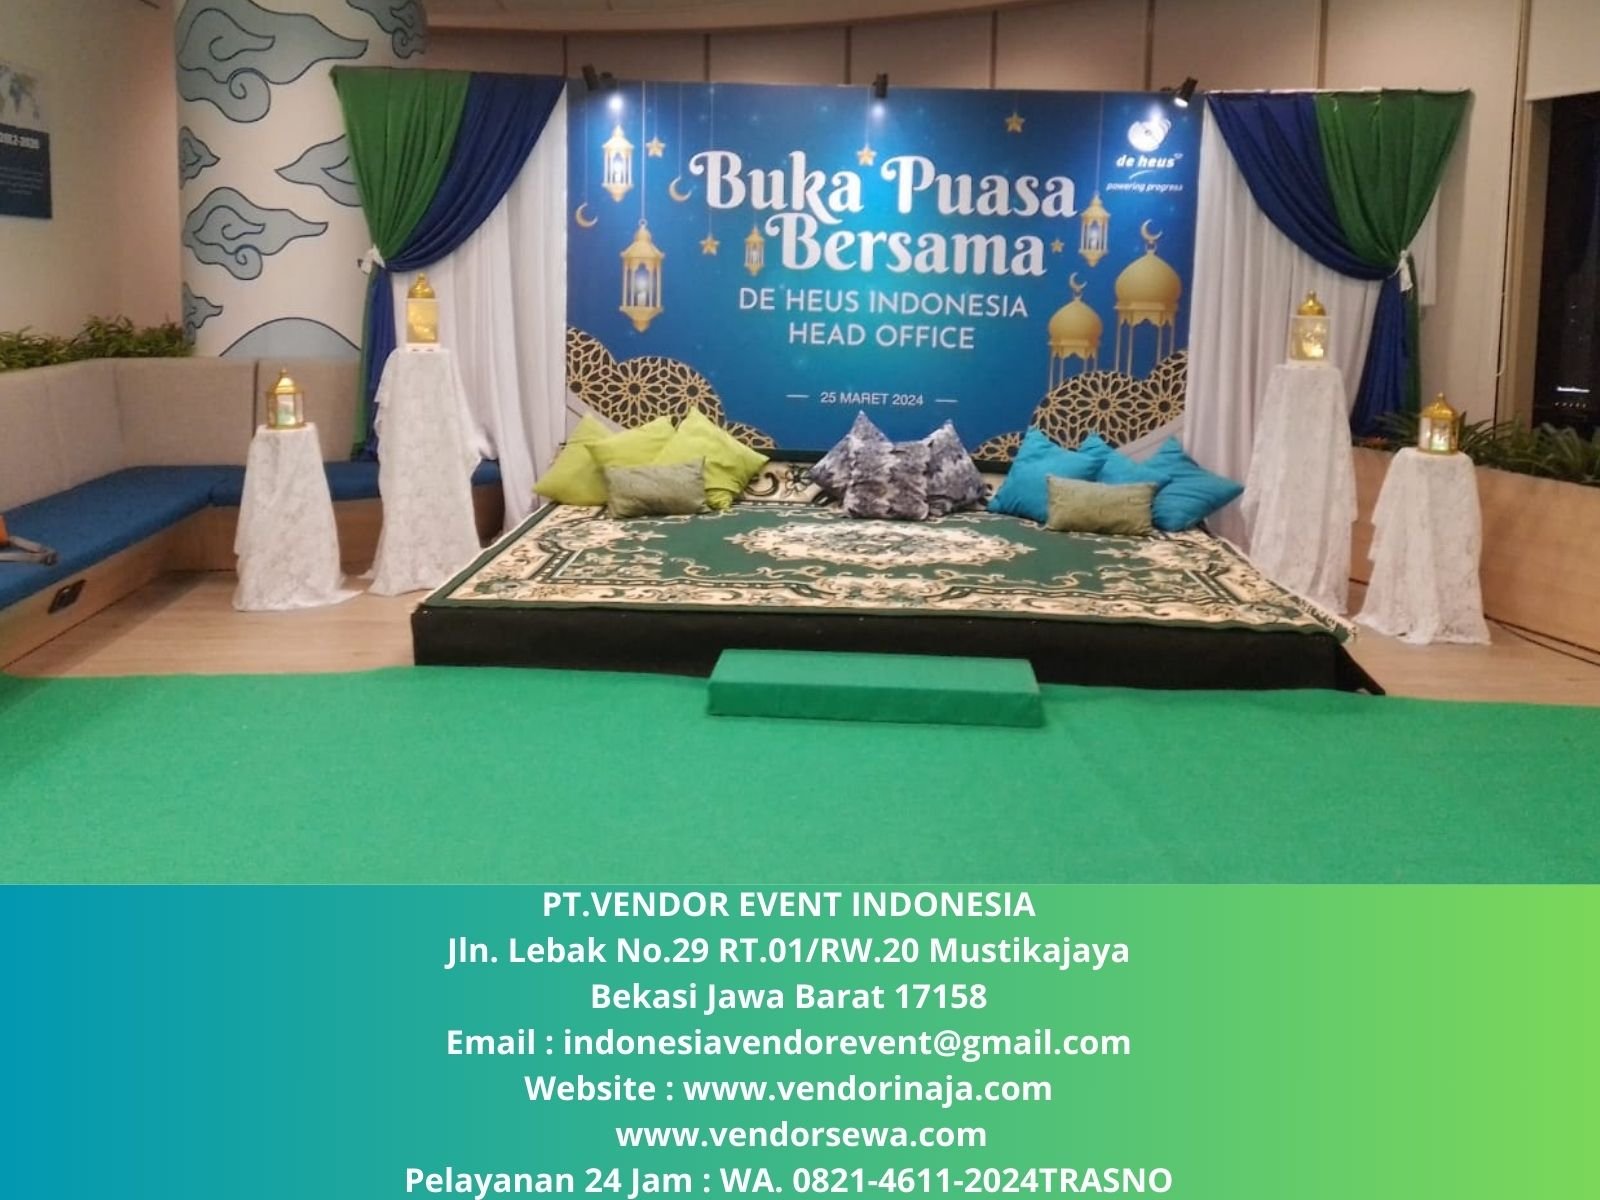 Sewa Panggung Karpet Dan Backdrop Murah Jakarta